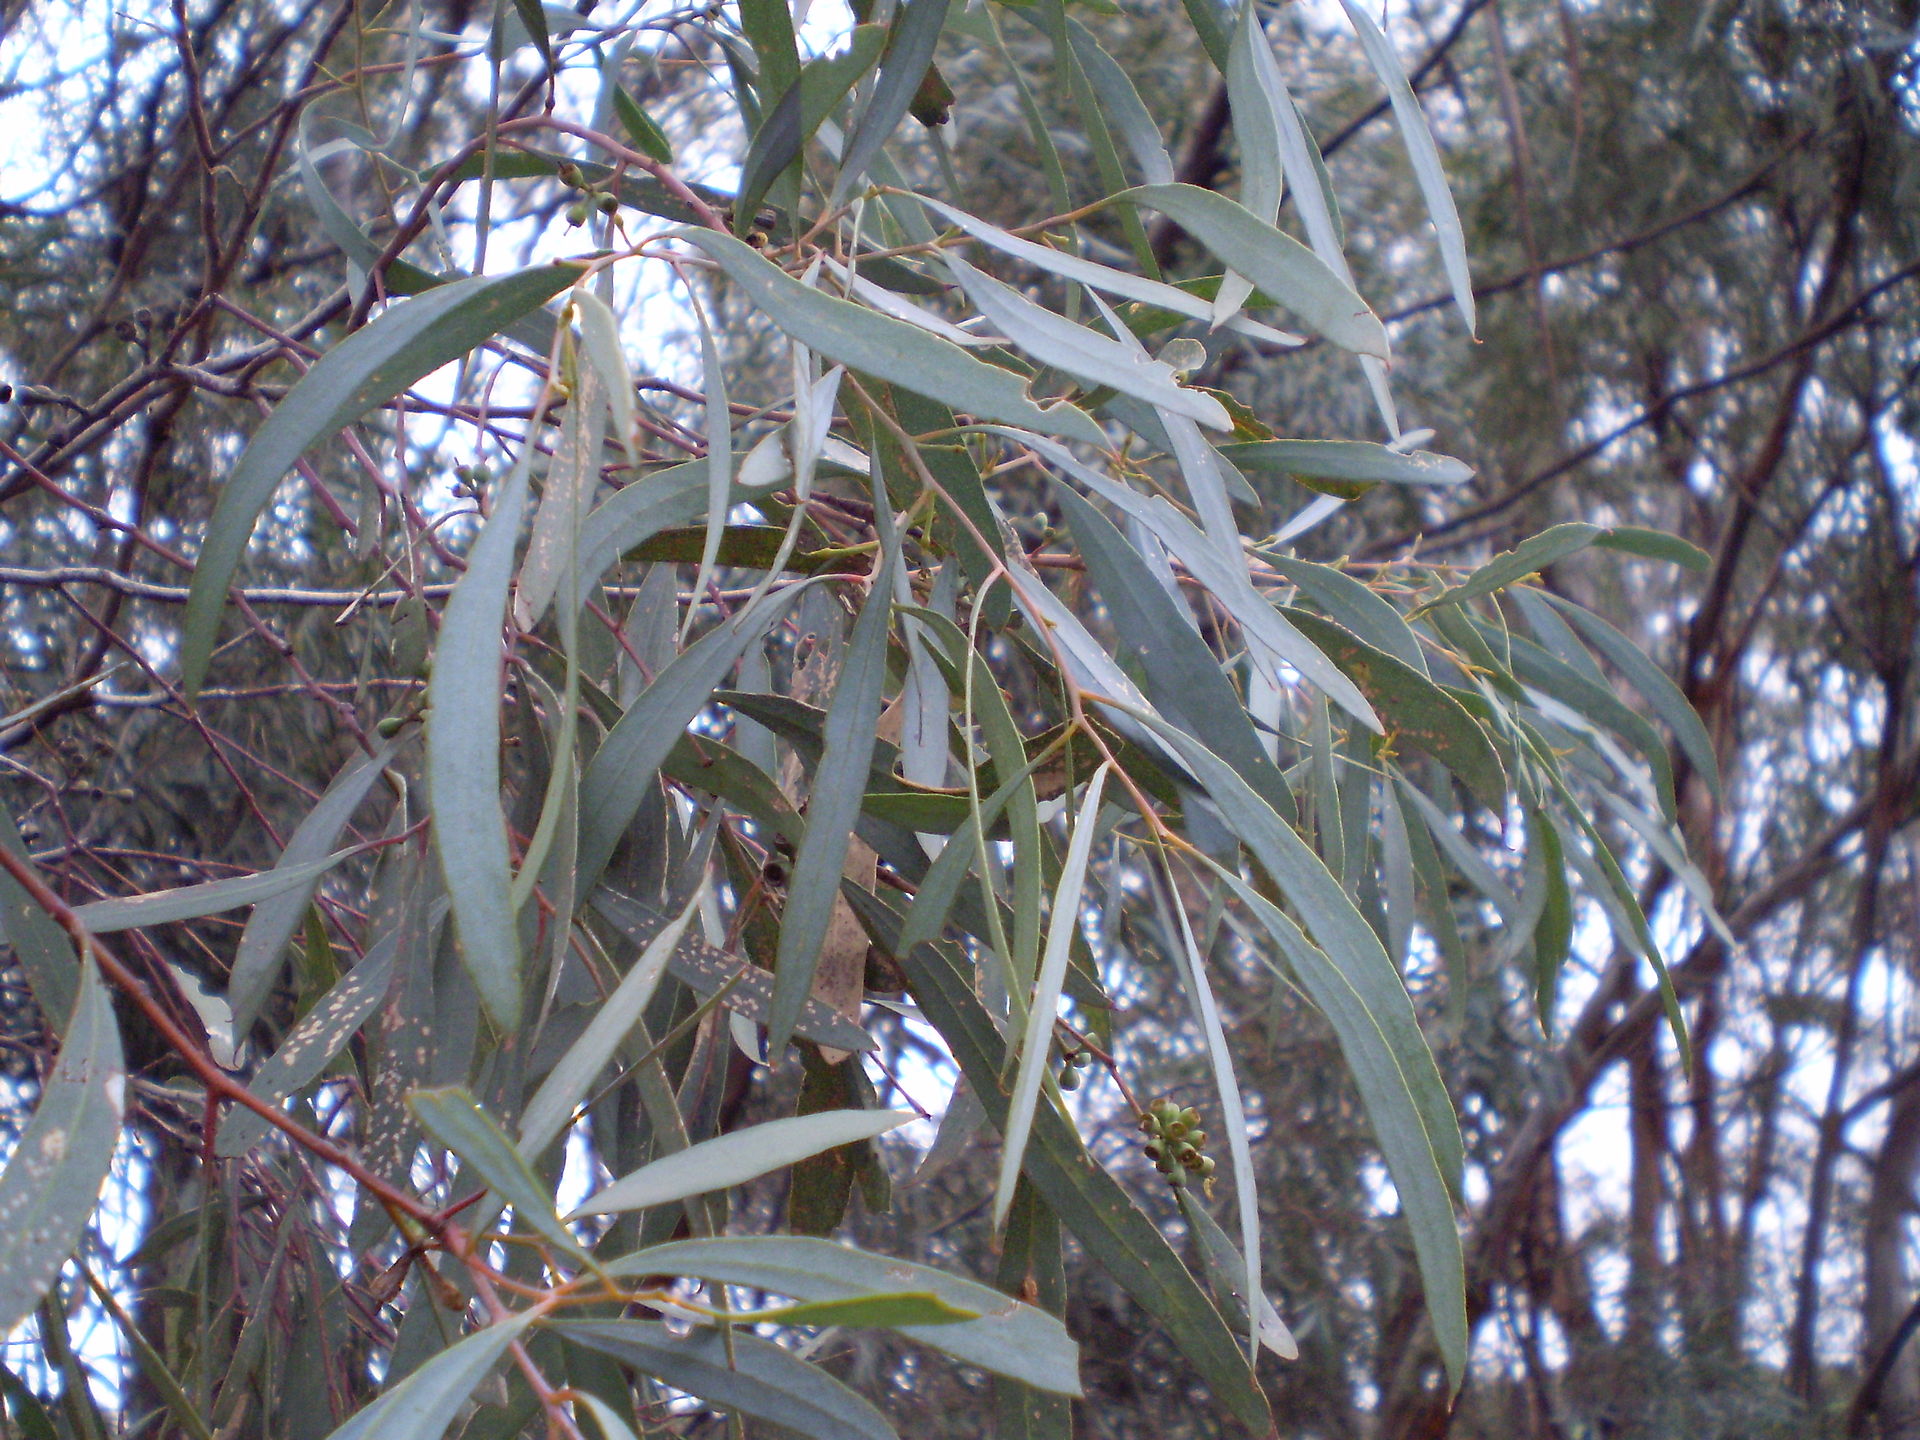 Oil Drops of Wisdom – Eucalyptus